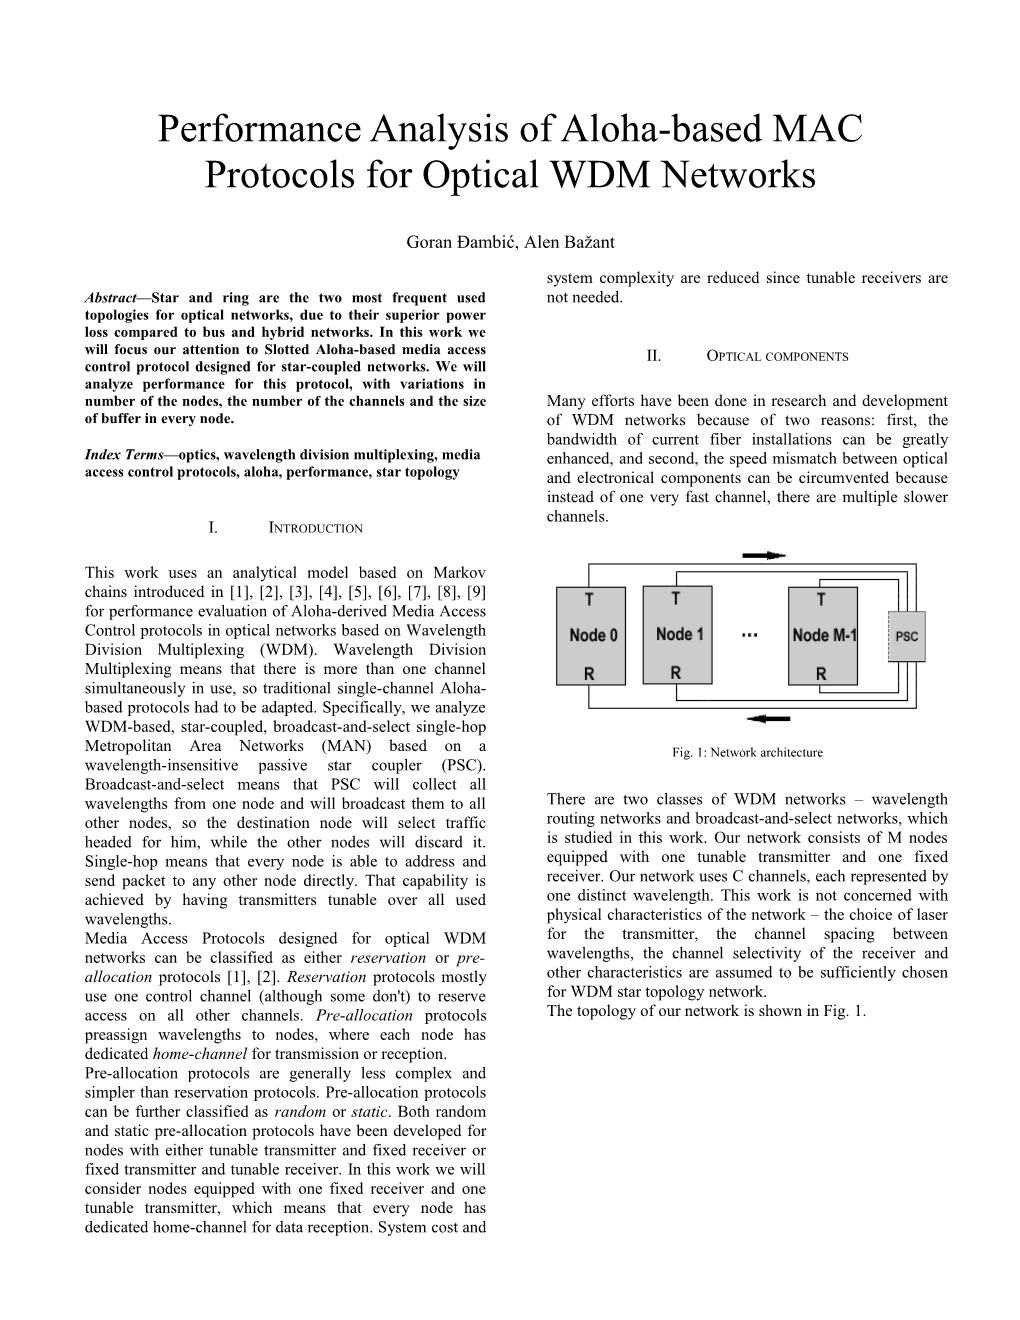 Performance Analysis of Aloha-Based MAC Protocols for Optical WDM Networks